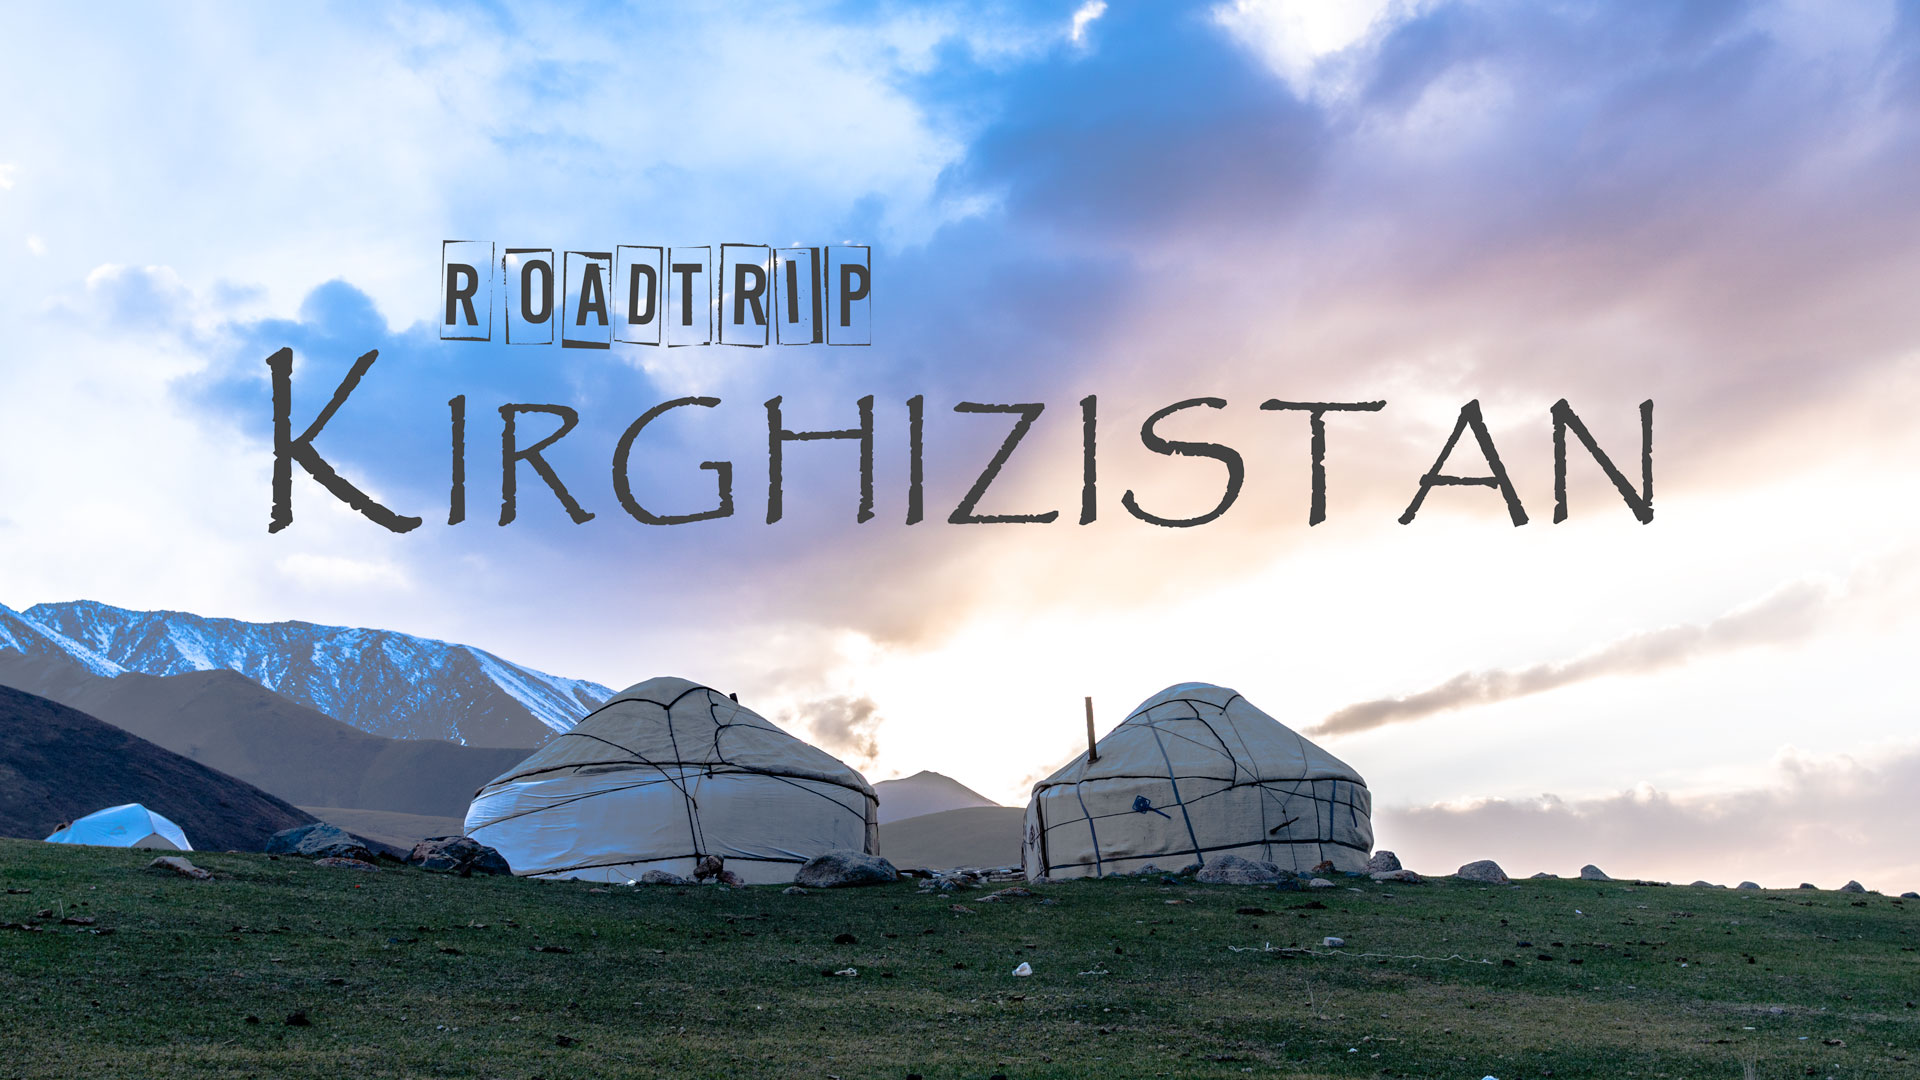 SerialHikers stop autostop world monde tour hitchhiking aventure adventure alternative travel voyage sans avion no fly Kyrgyzstan Kirghizistan roadtrip newsletters